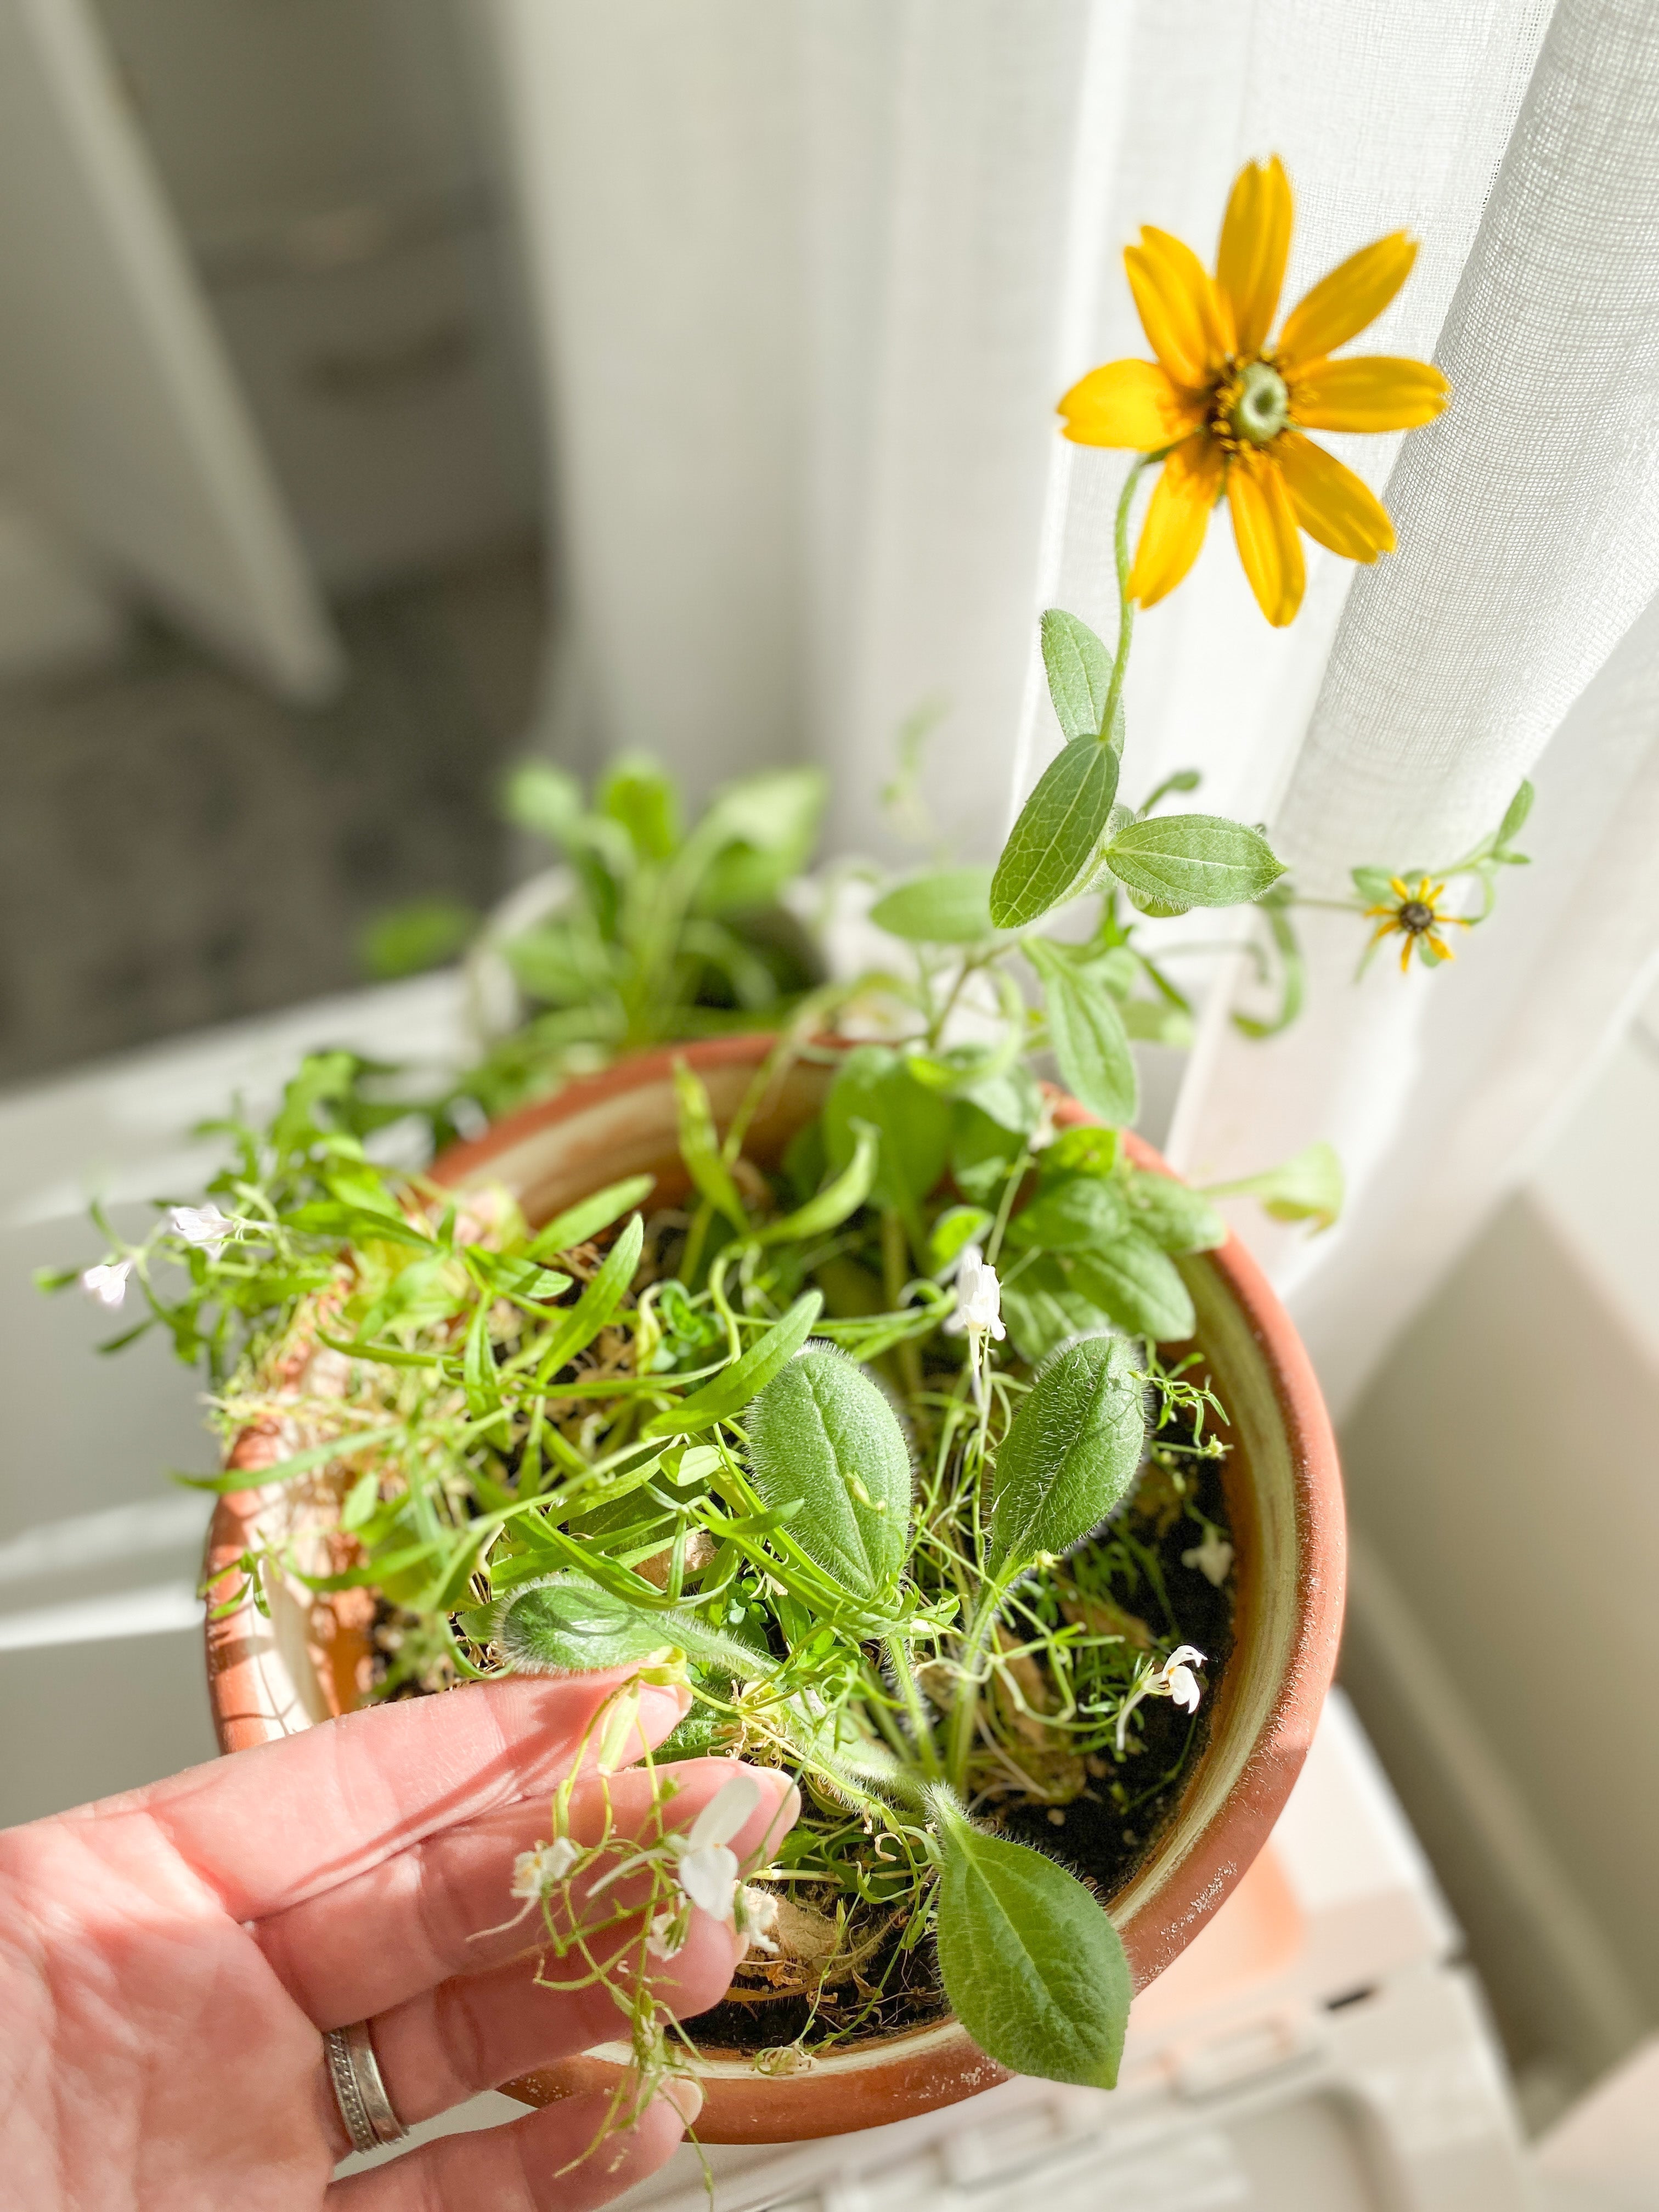 growNOTES™ Wildflower Baby Shower Plantable Invitation - Purple Florals